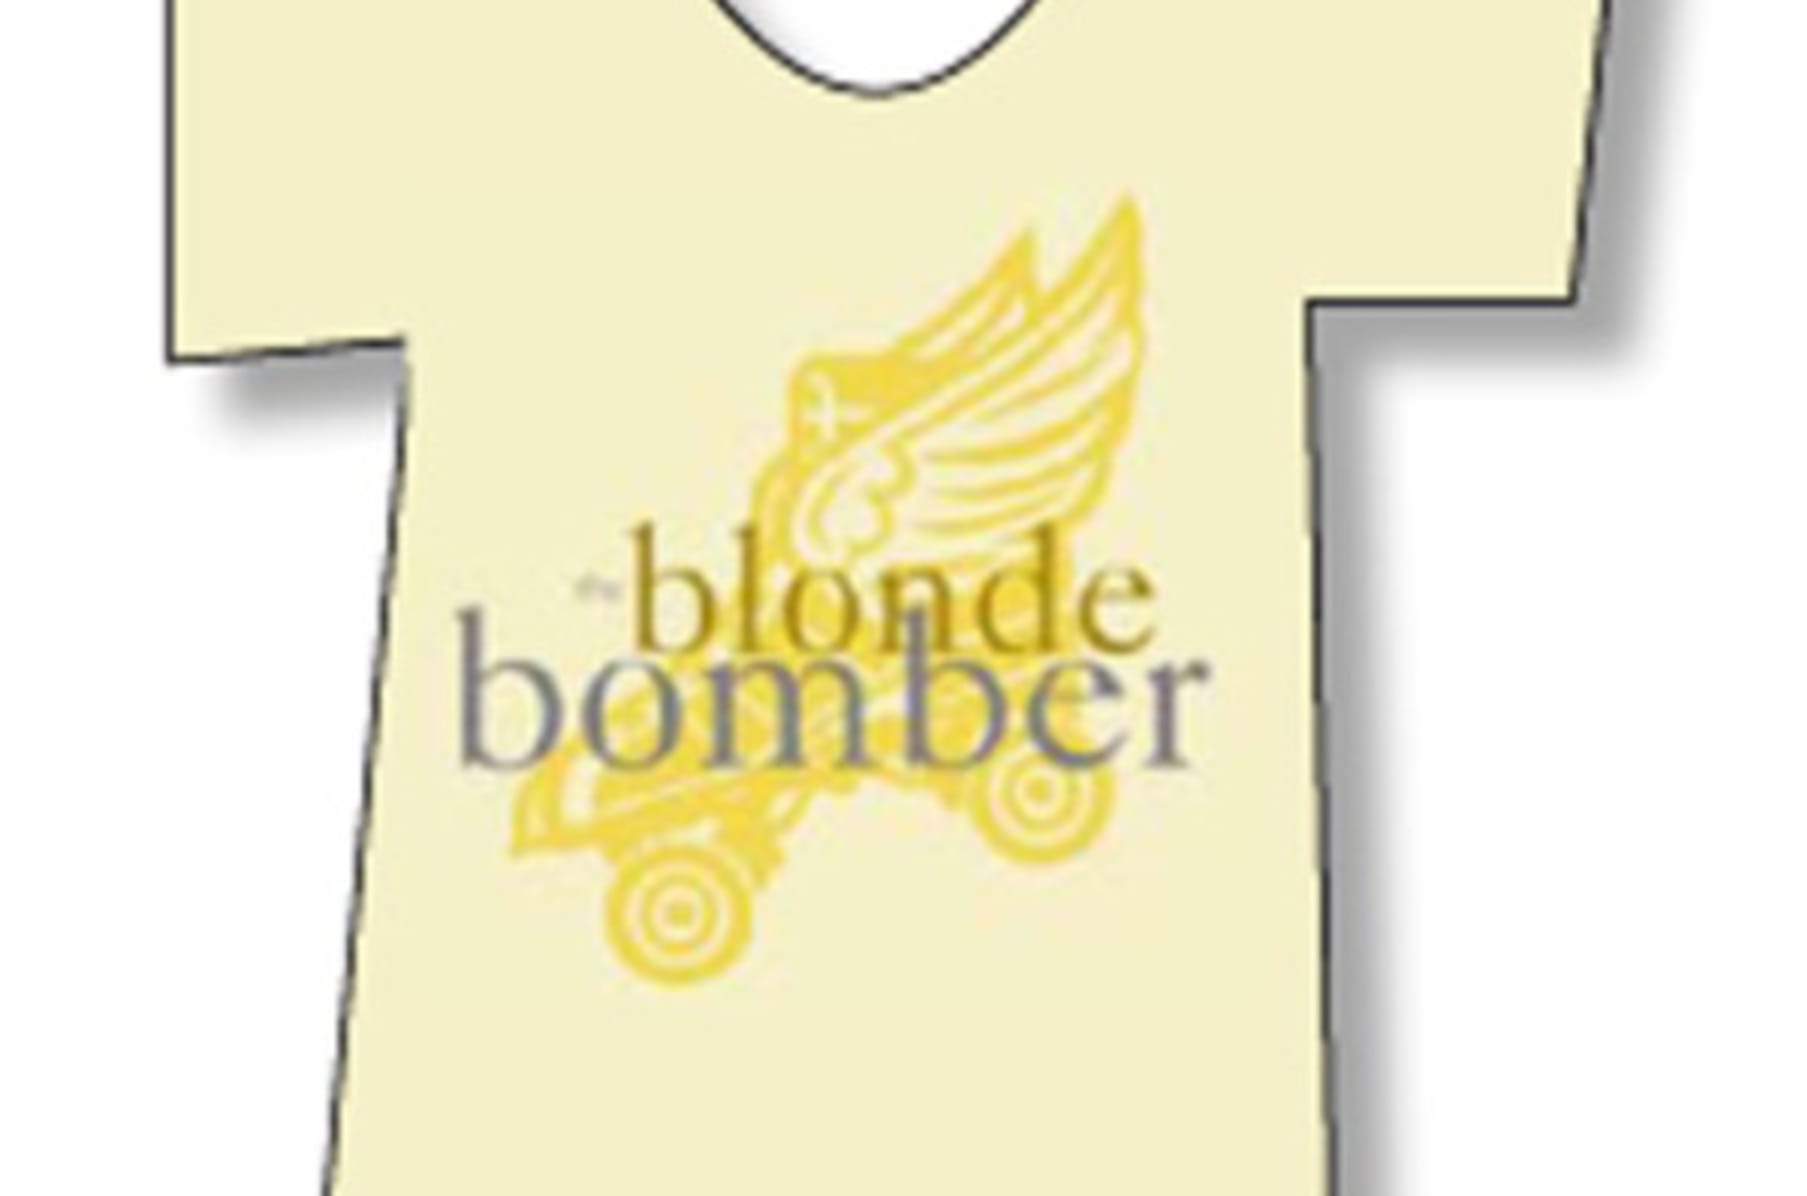 The blonde bomber